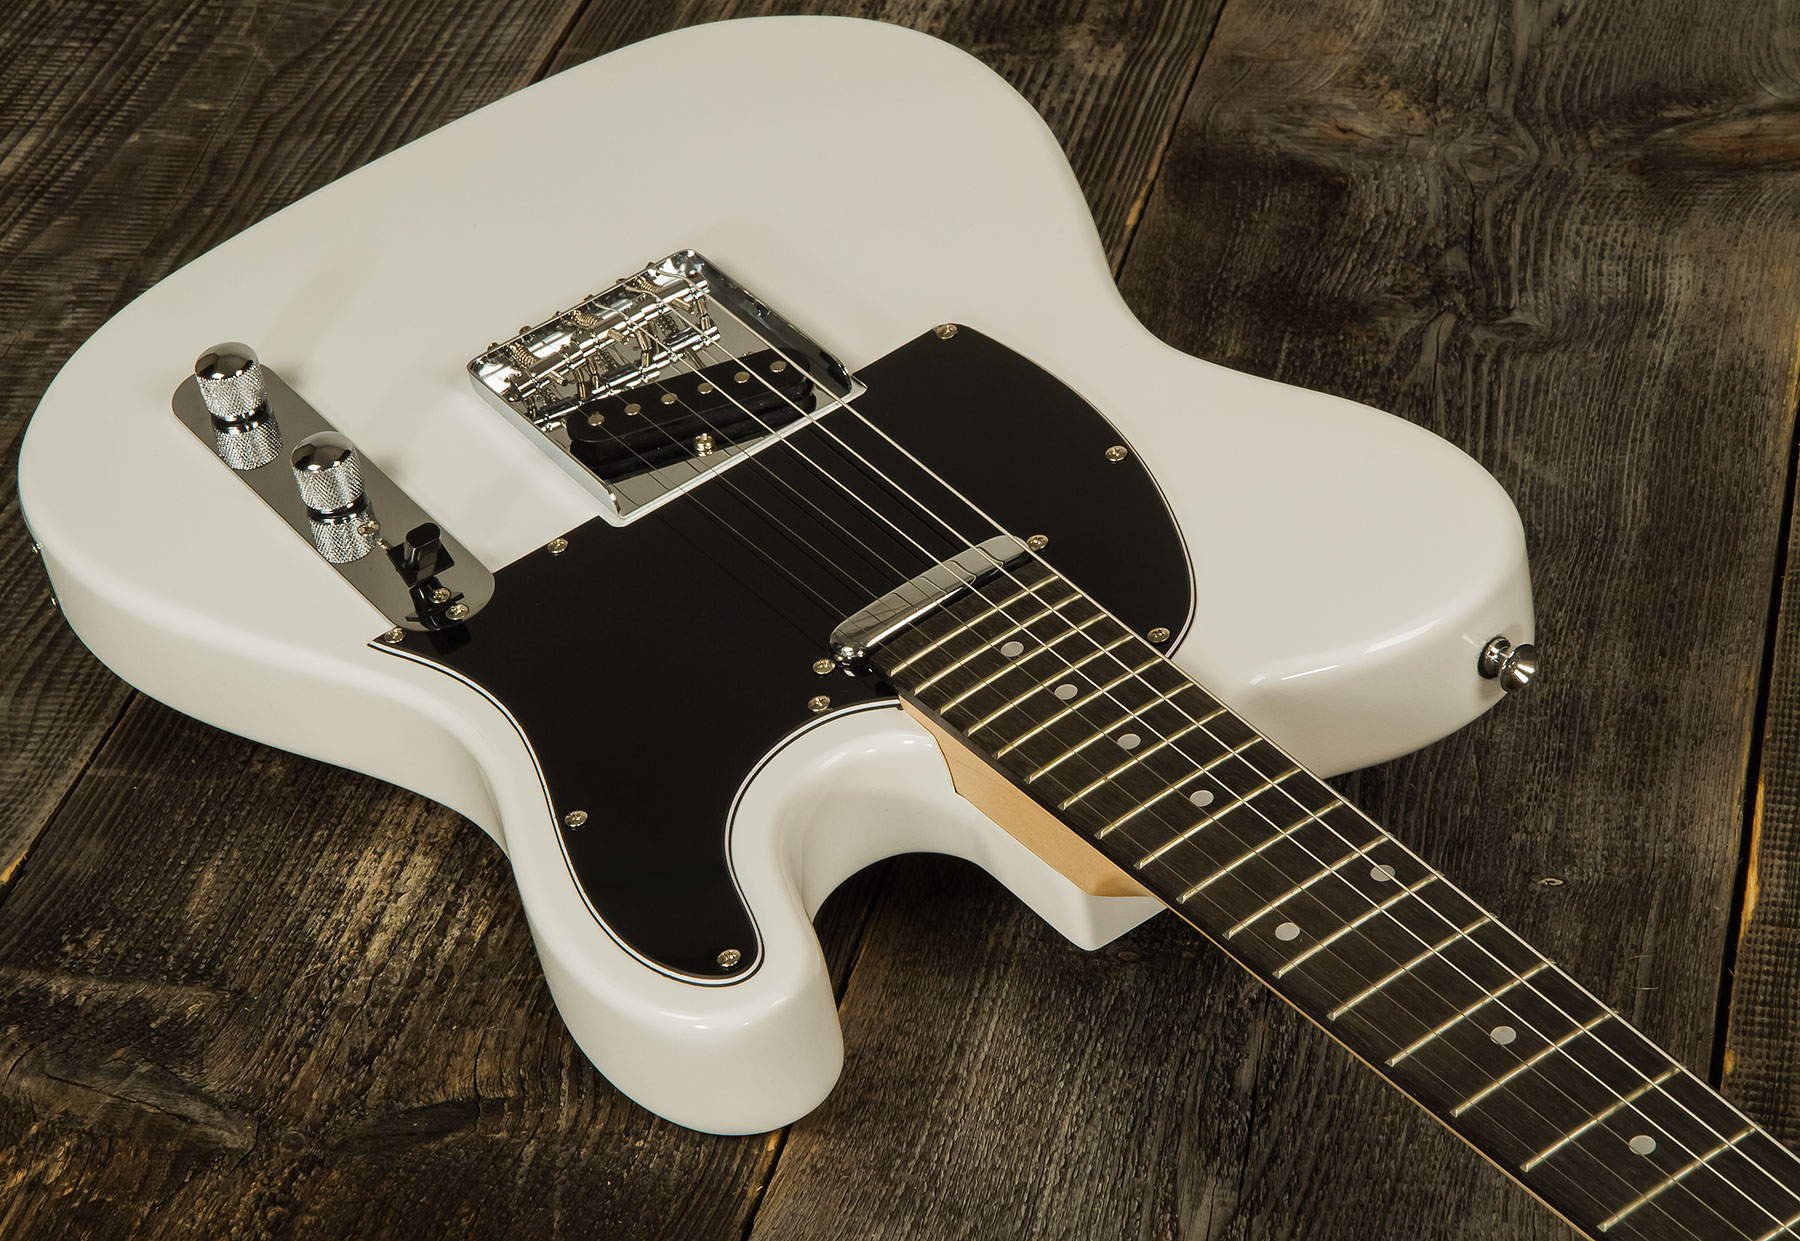 Eastone Tl70 +marshall Mg10g Combo 10 W +housse +courroie +cable +mediators - Olympic White - Elektrische gitaar set - Variation 2